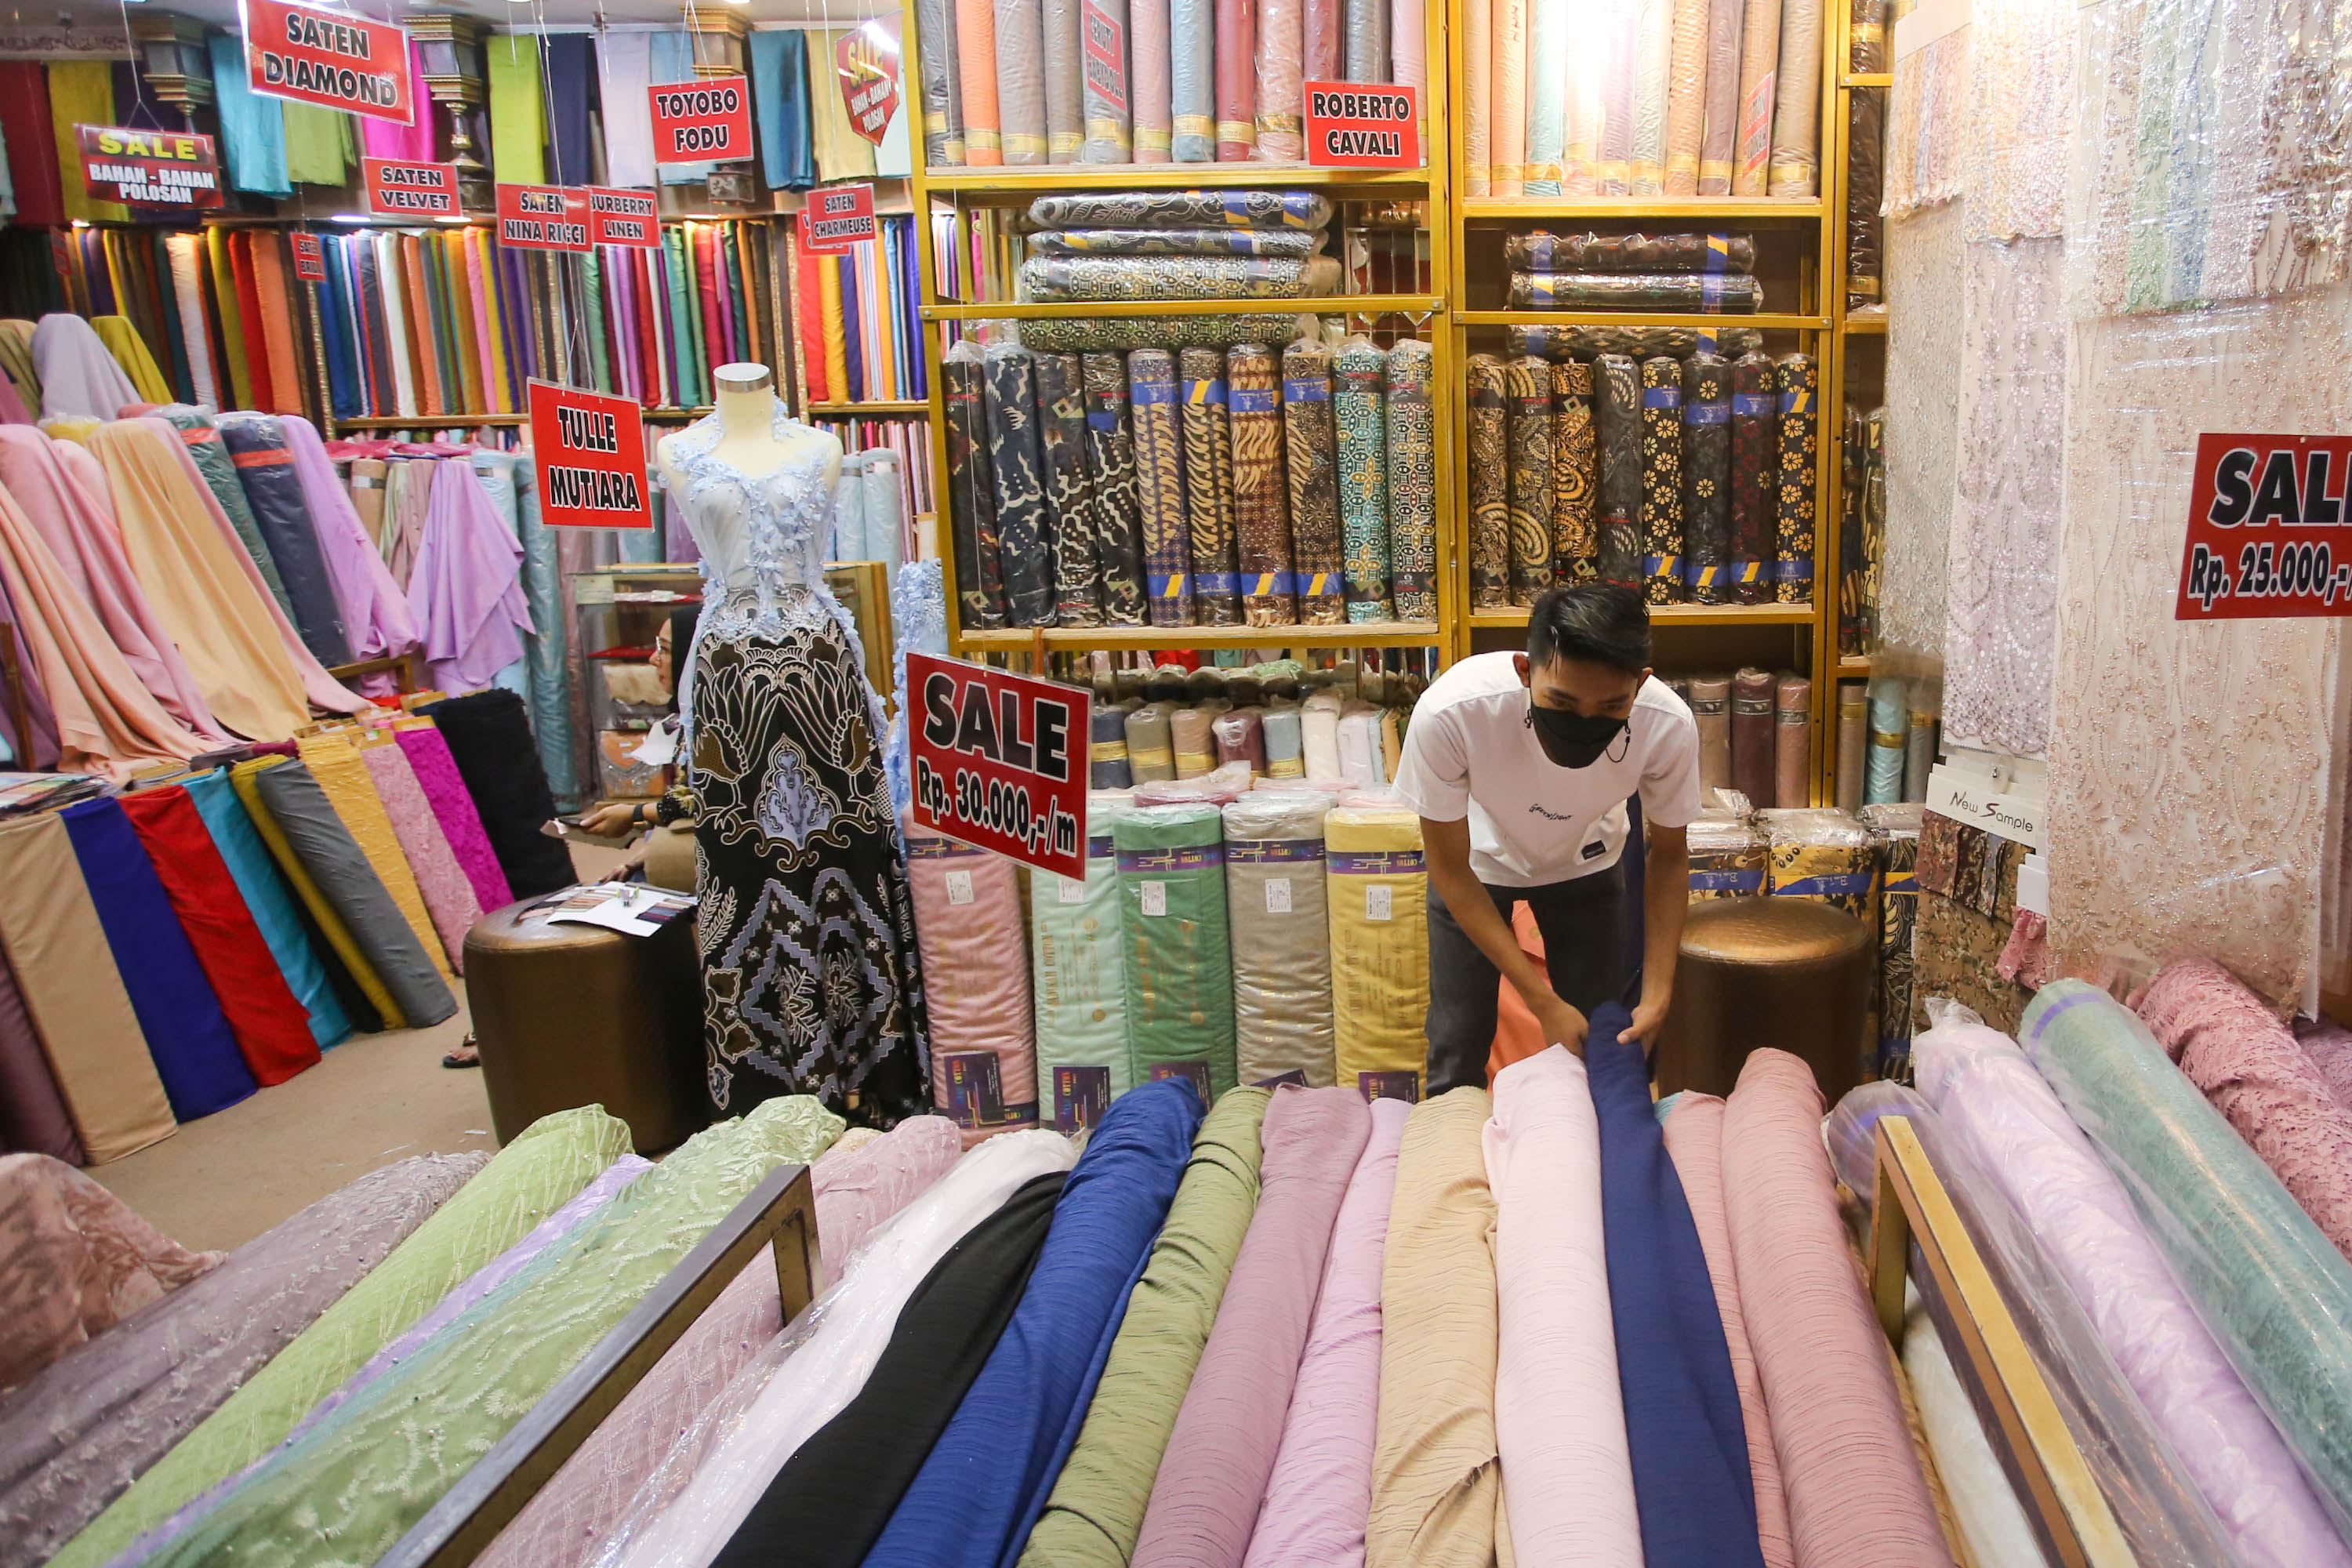 Pedagang menata kain bahan di kiosnya pusat grosir tekstil Pasar Tanah Abang, Jakarta, Jum'at, 20 Mei 2022. Foto: Ismail Pohan/TrenAsia